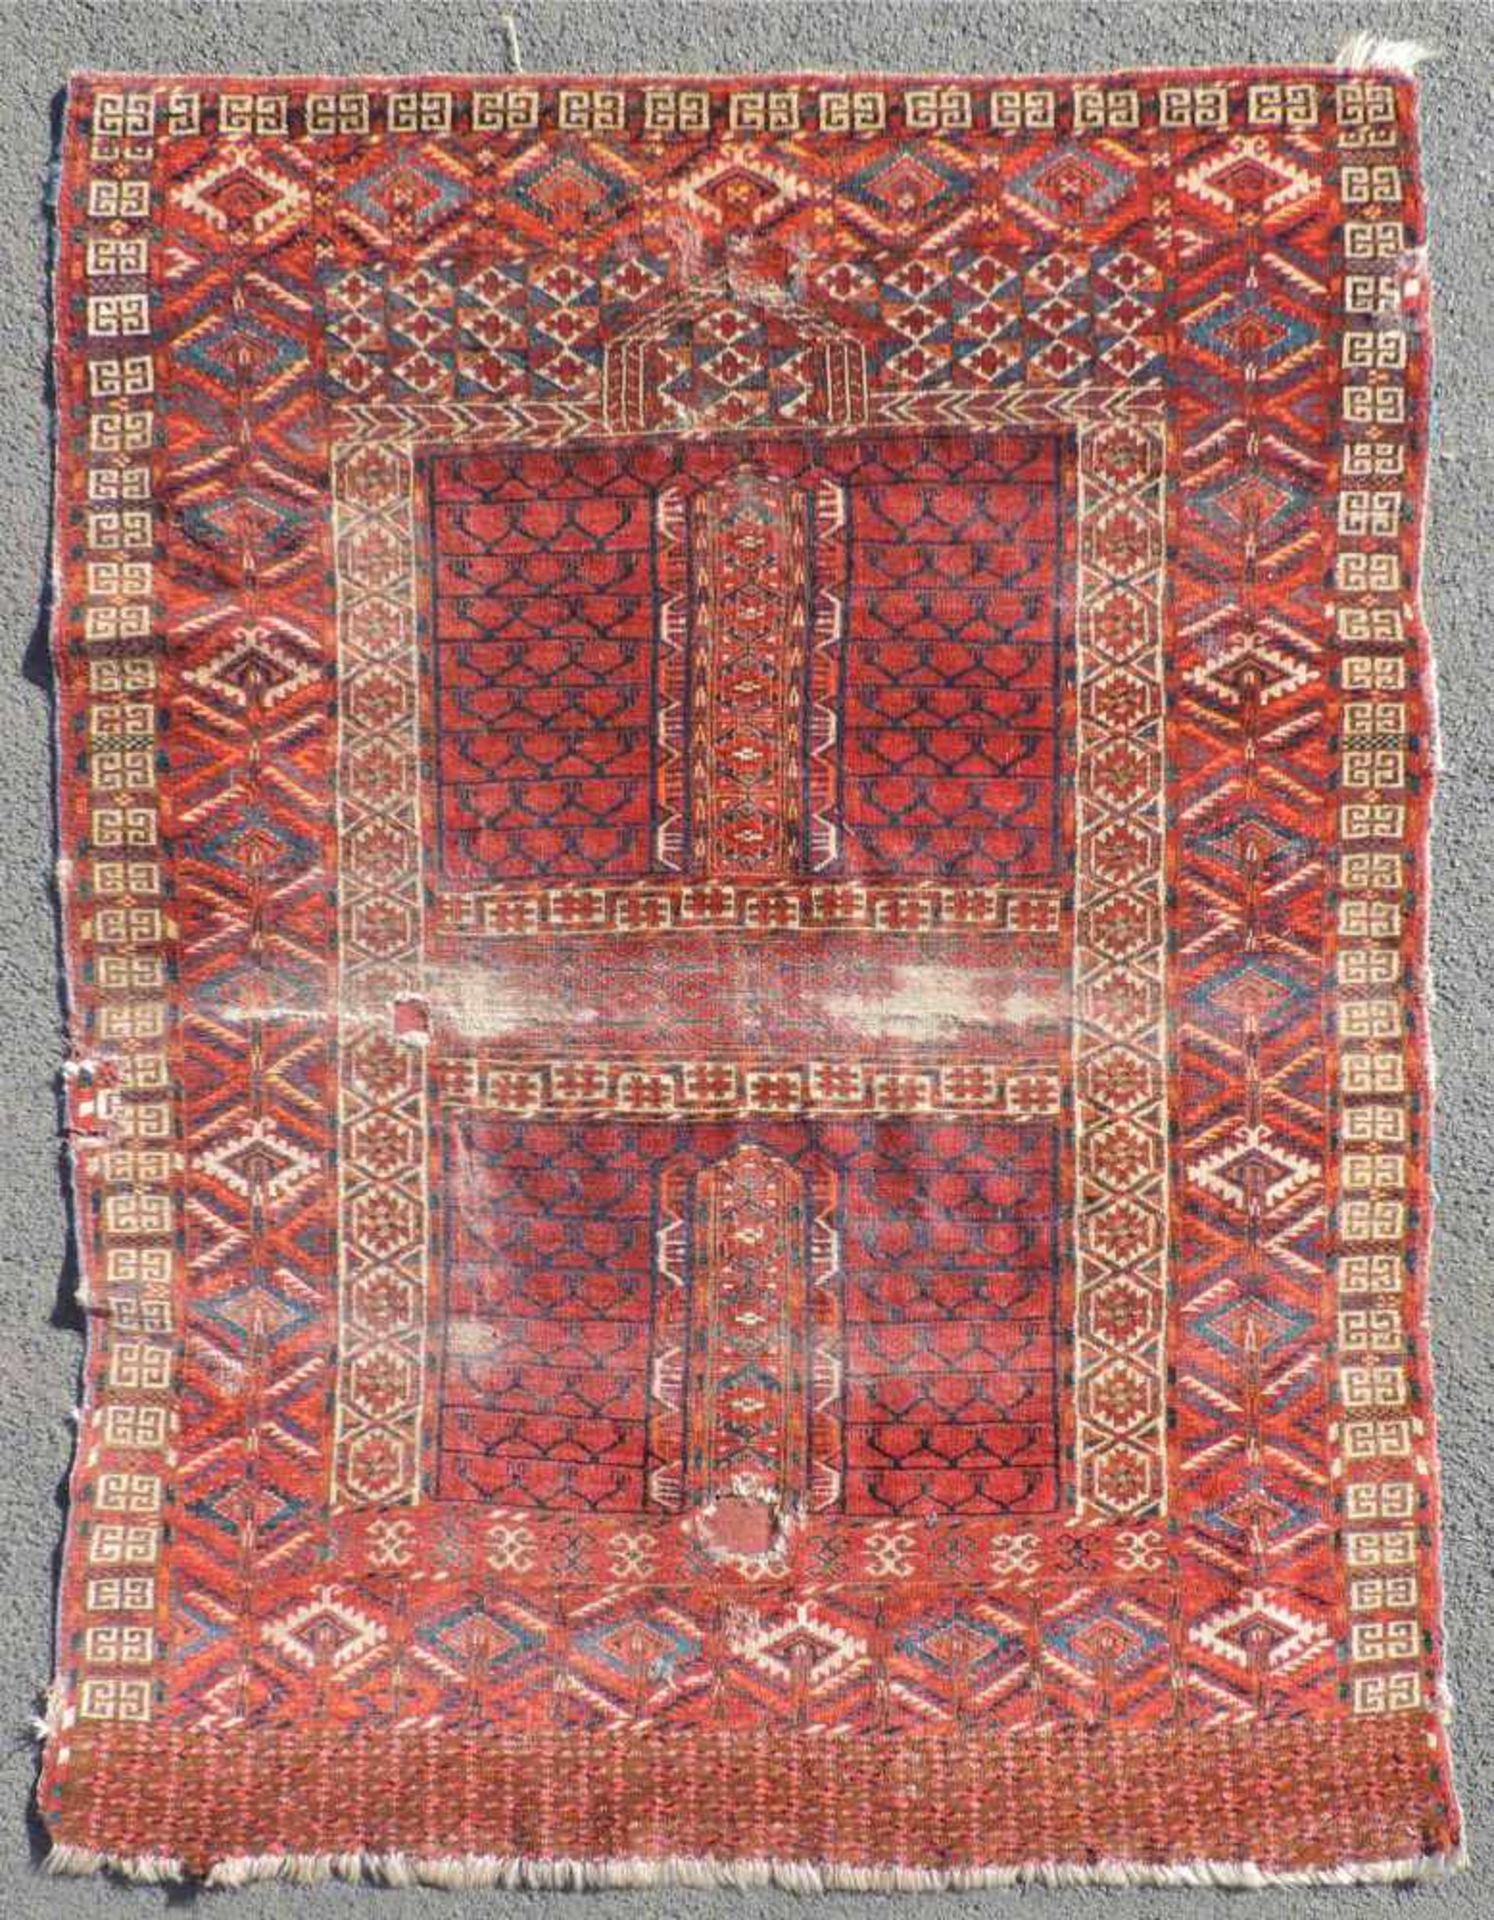 Tekke Ensi Stammesteppich. Turkmenistan. Antik, Mitte 19. Jahrhundert.167 cm x 118 cm. Handgeknüpft.